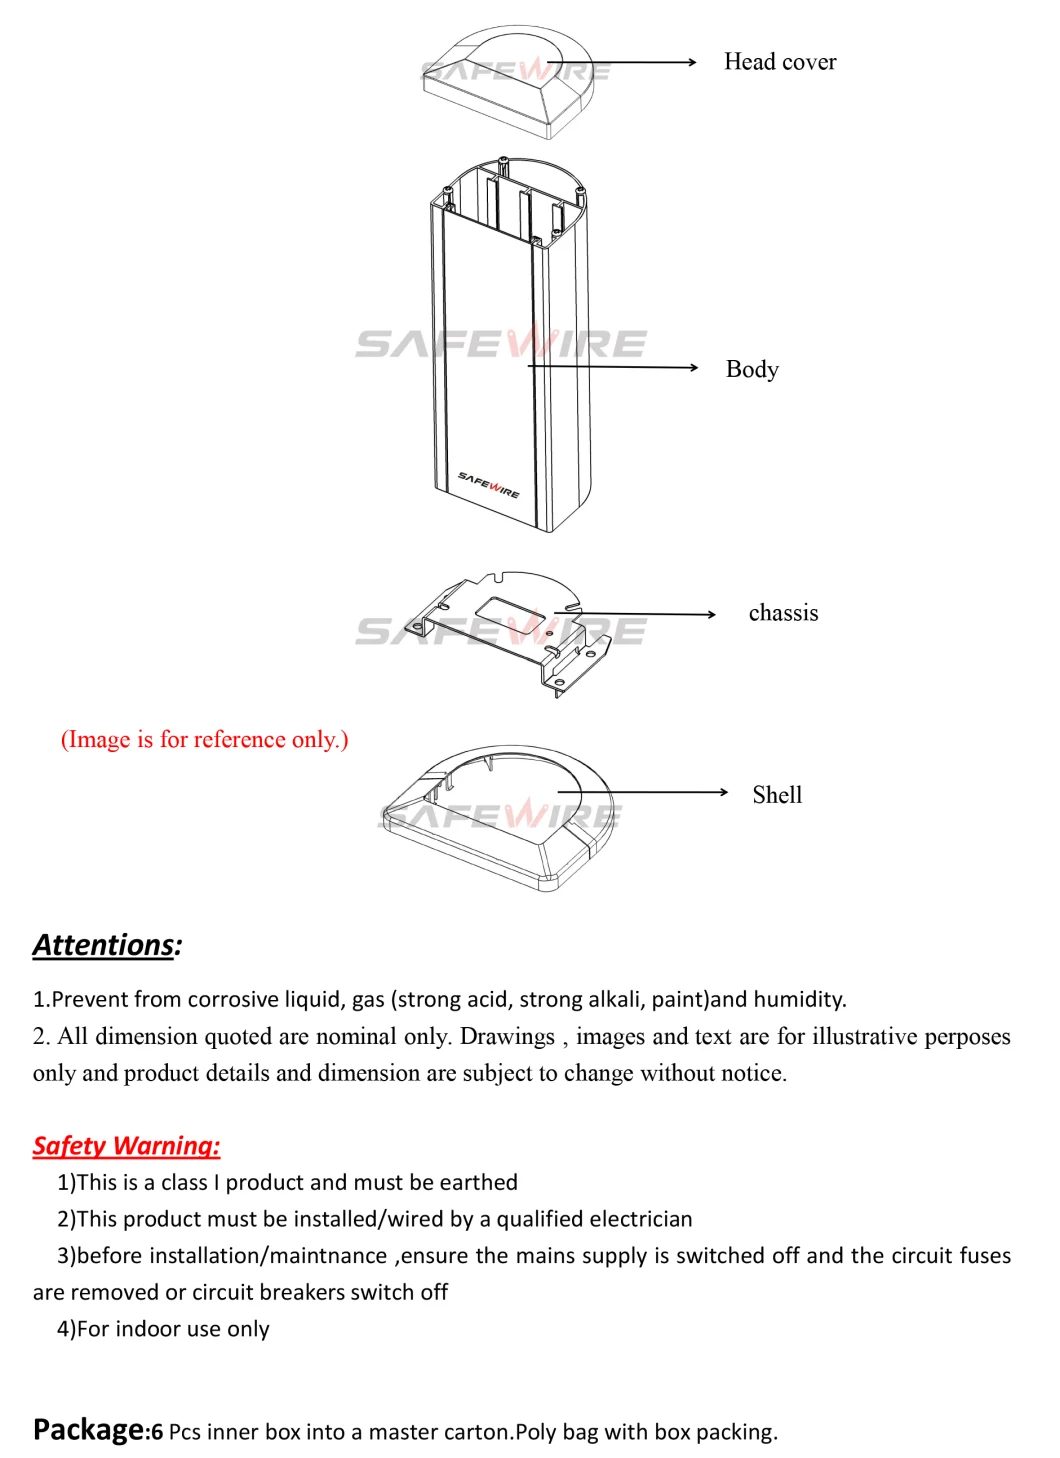 IEC60084 Standard Service Outlet Box / Mini Column / Electrical Outlet